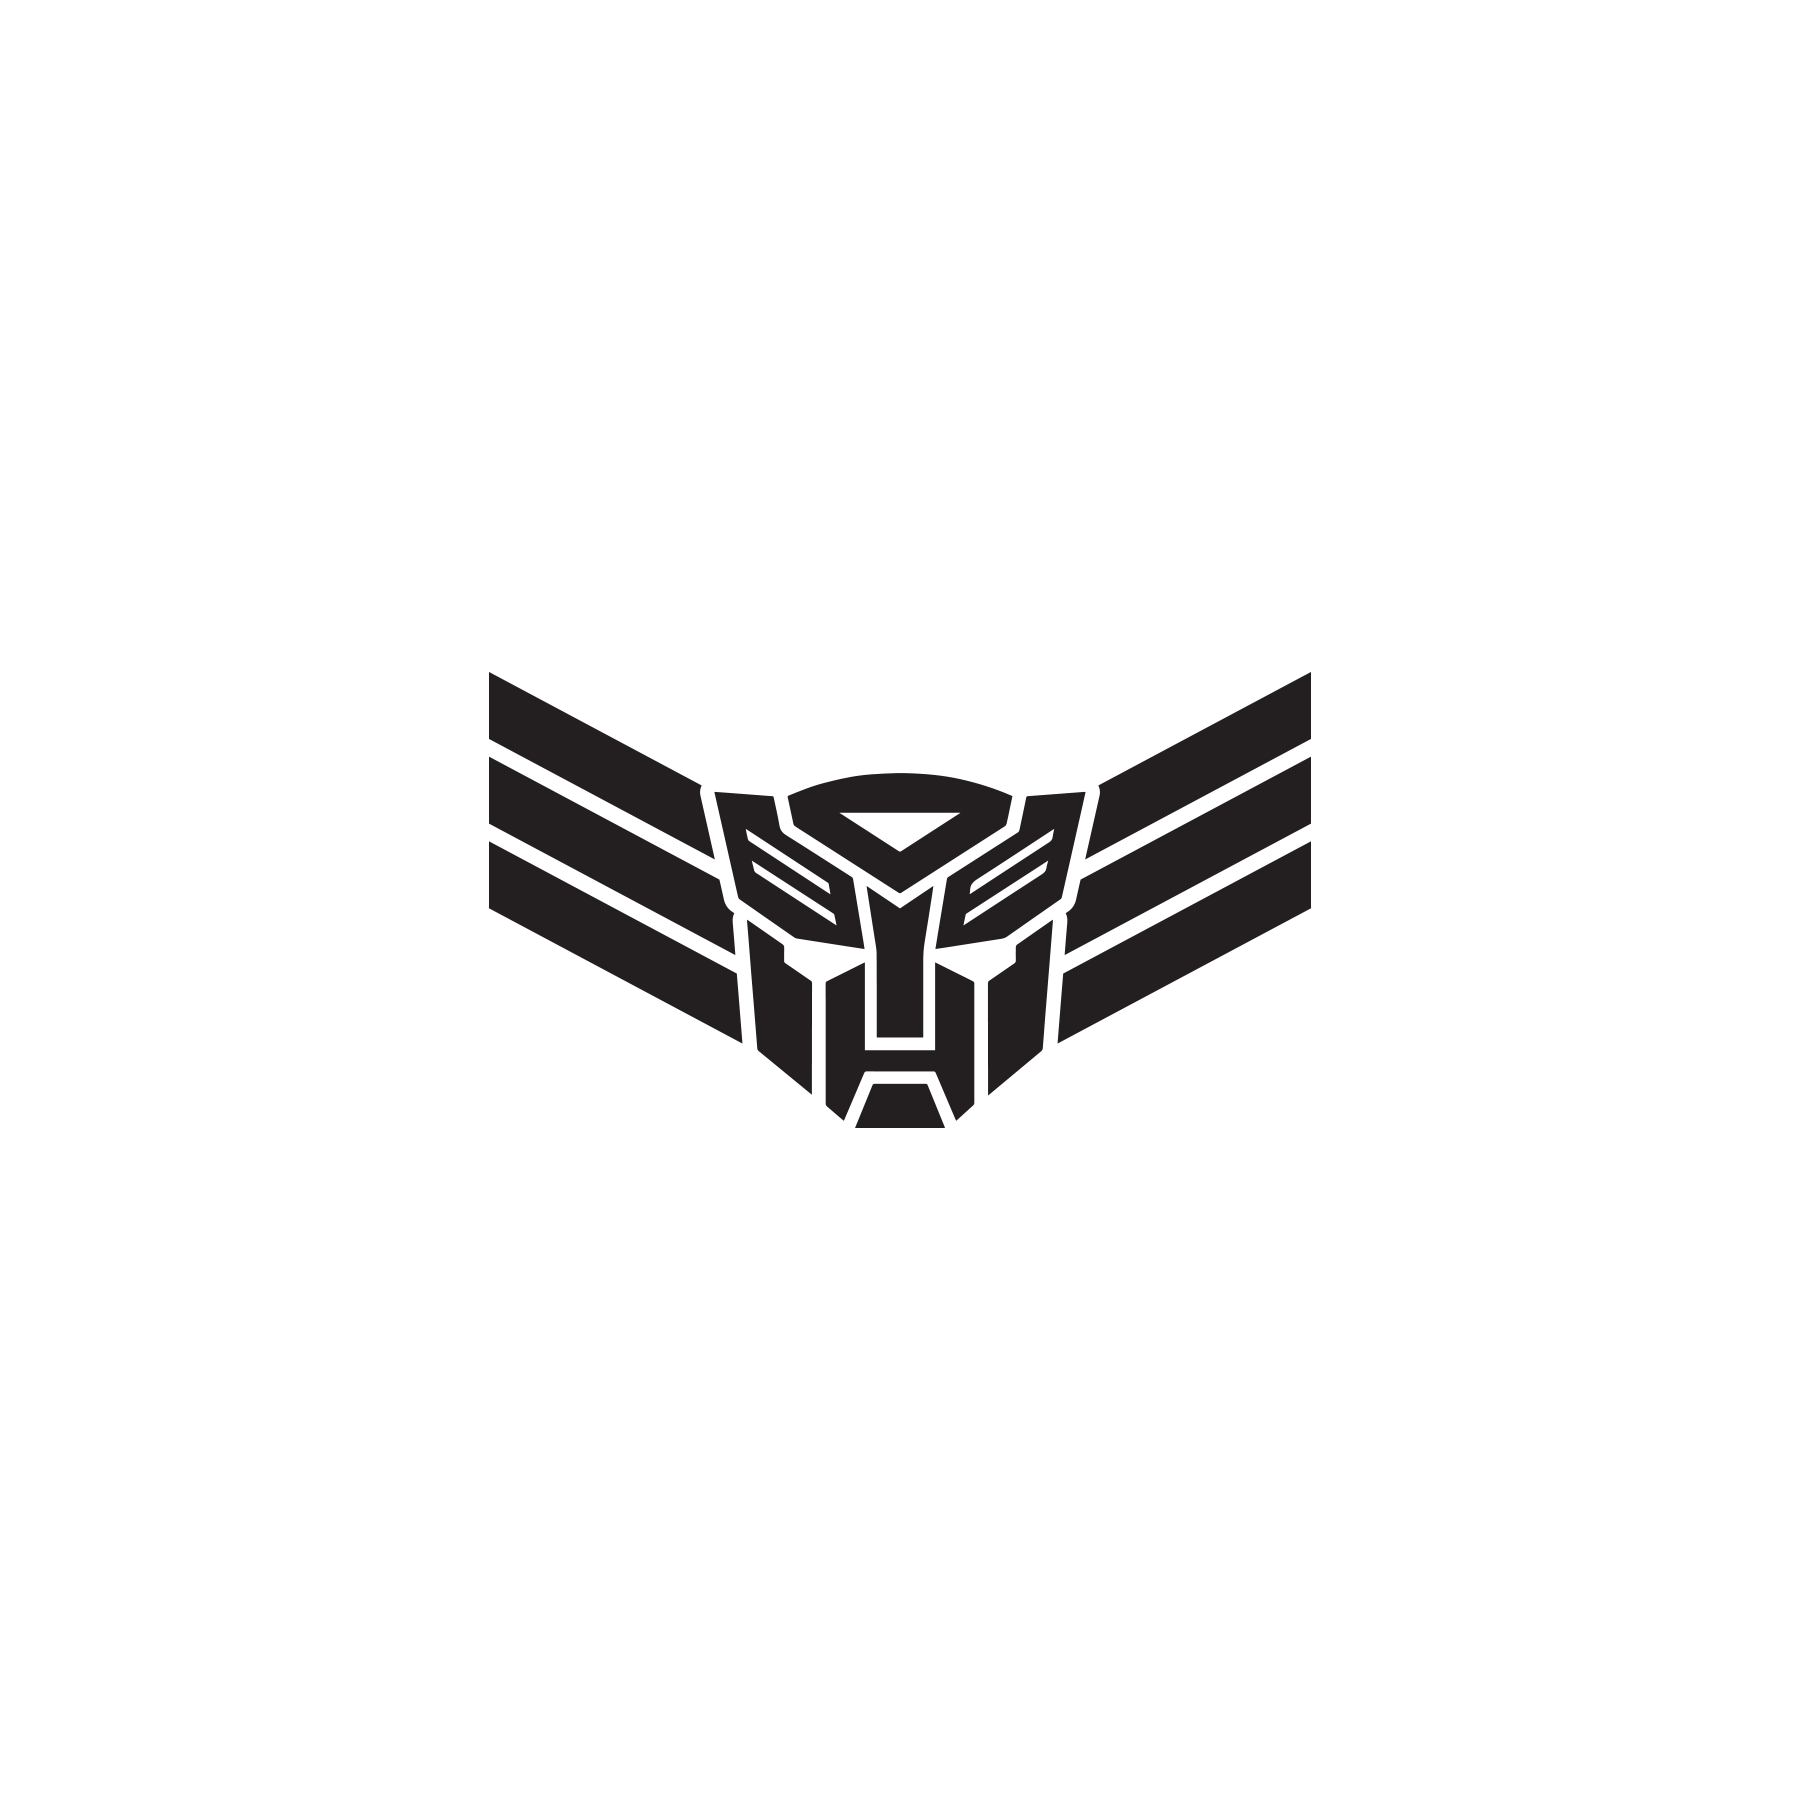 Autobot - Google Search | Transformers, Autobots, Transformer logo